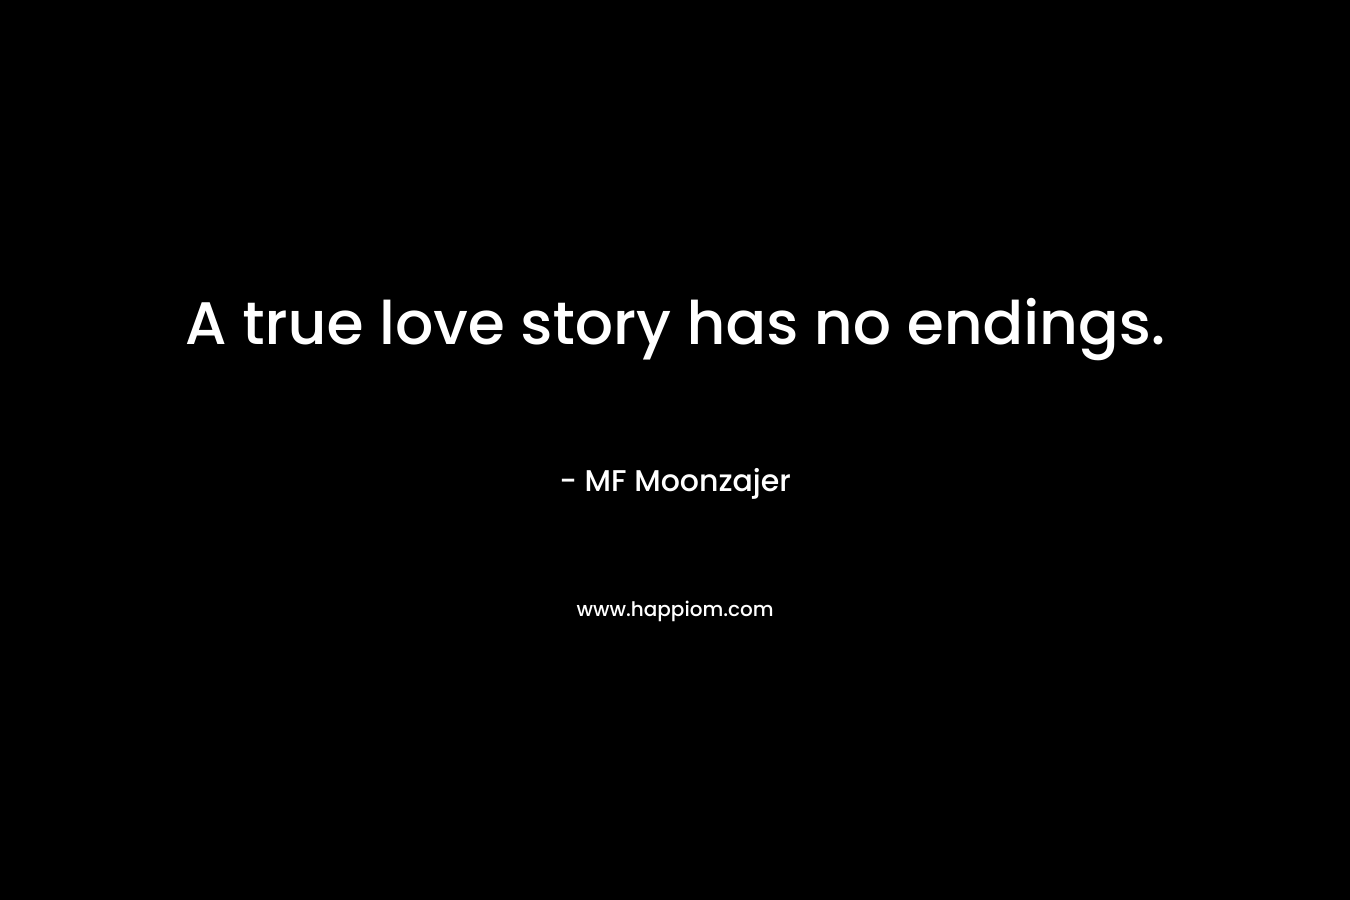 A true love story has no endings.